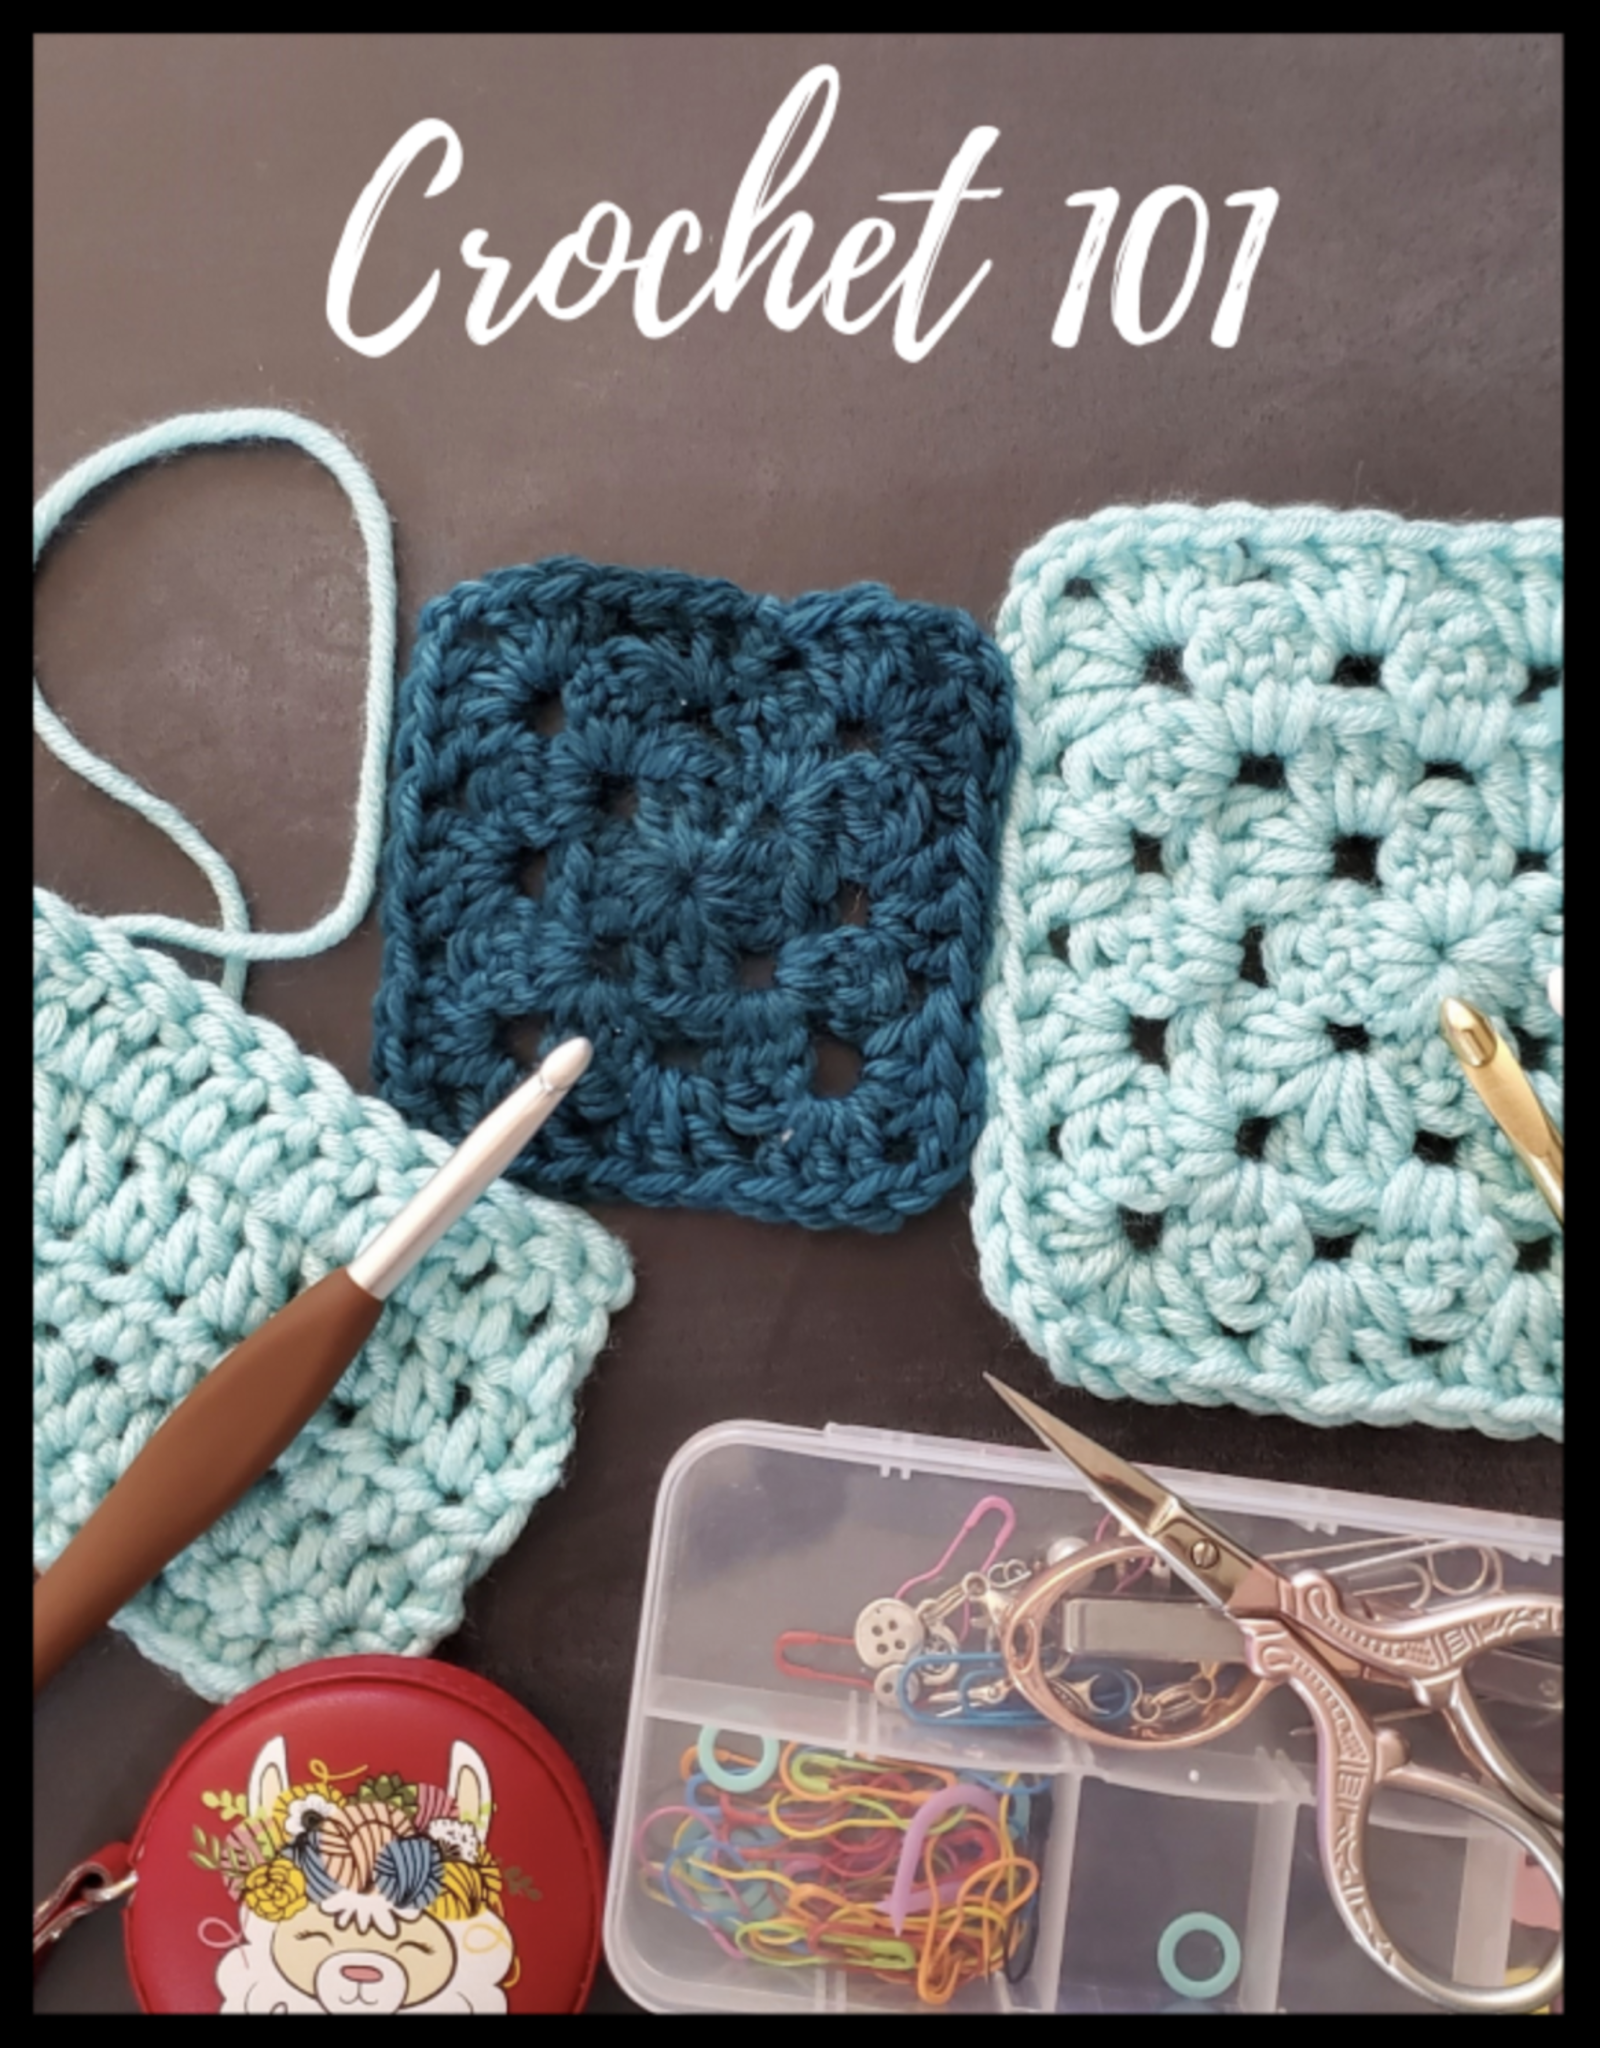 Crochet 101 - Saturdays, September 10 & 24, 12-2pm